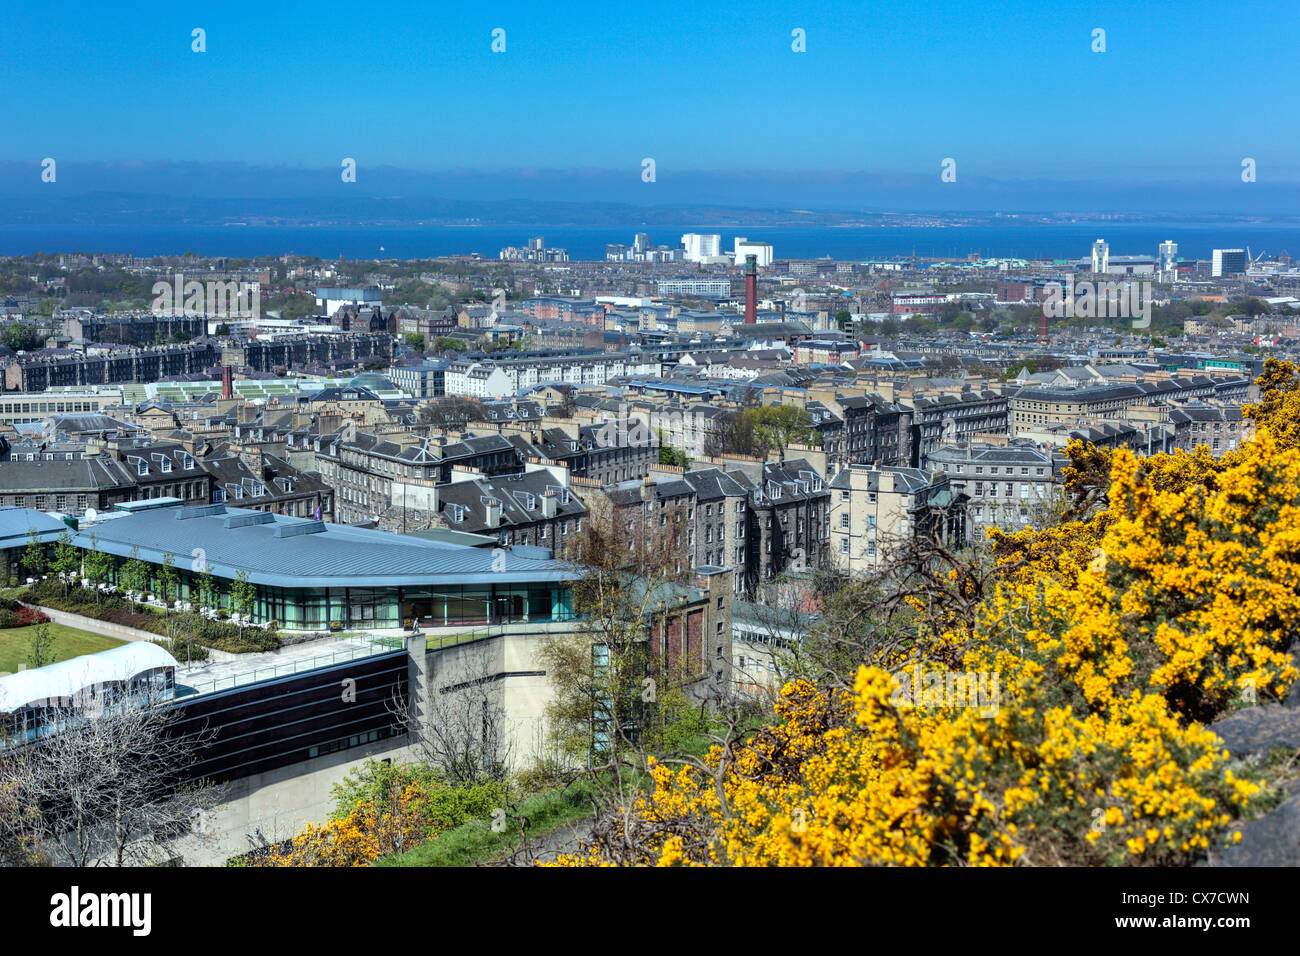 View of city from Calton Hill, Edinburgh, Scotland, UK Stock Photo